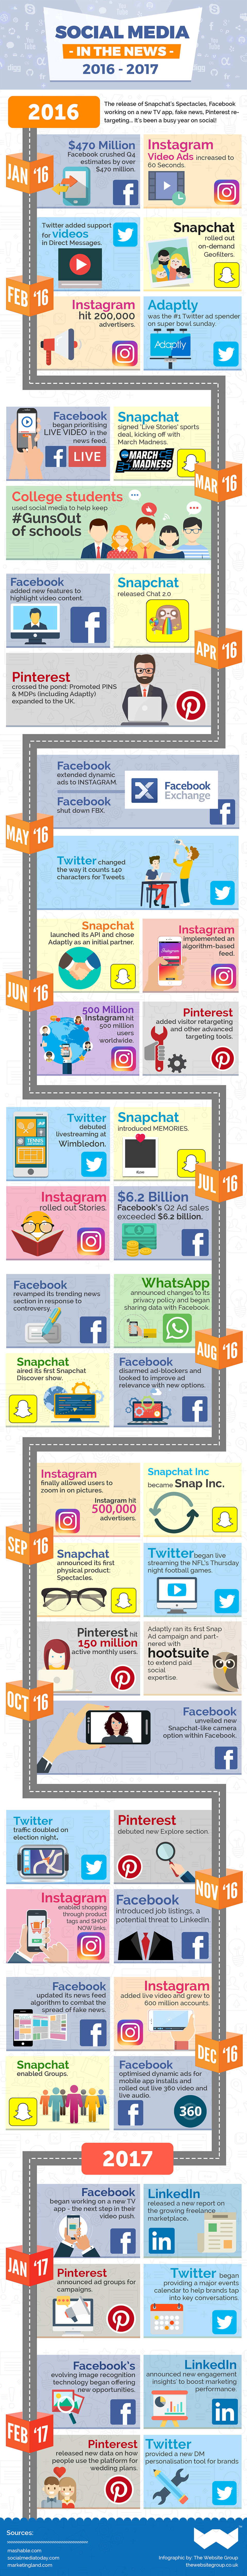 Social Media News and Milestones: 2016-2017